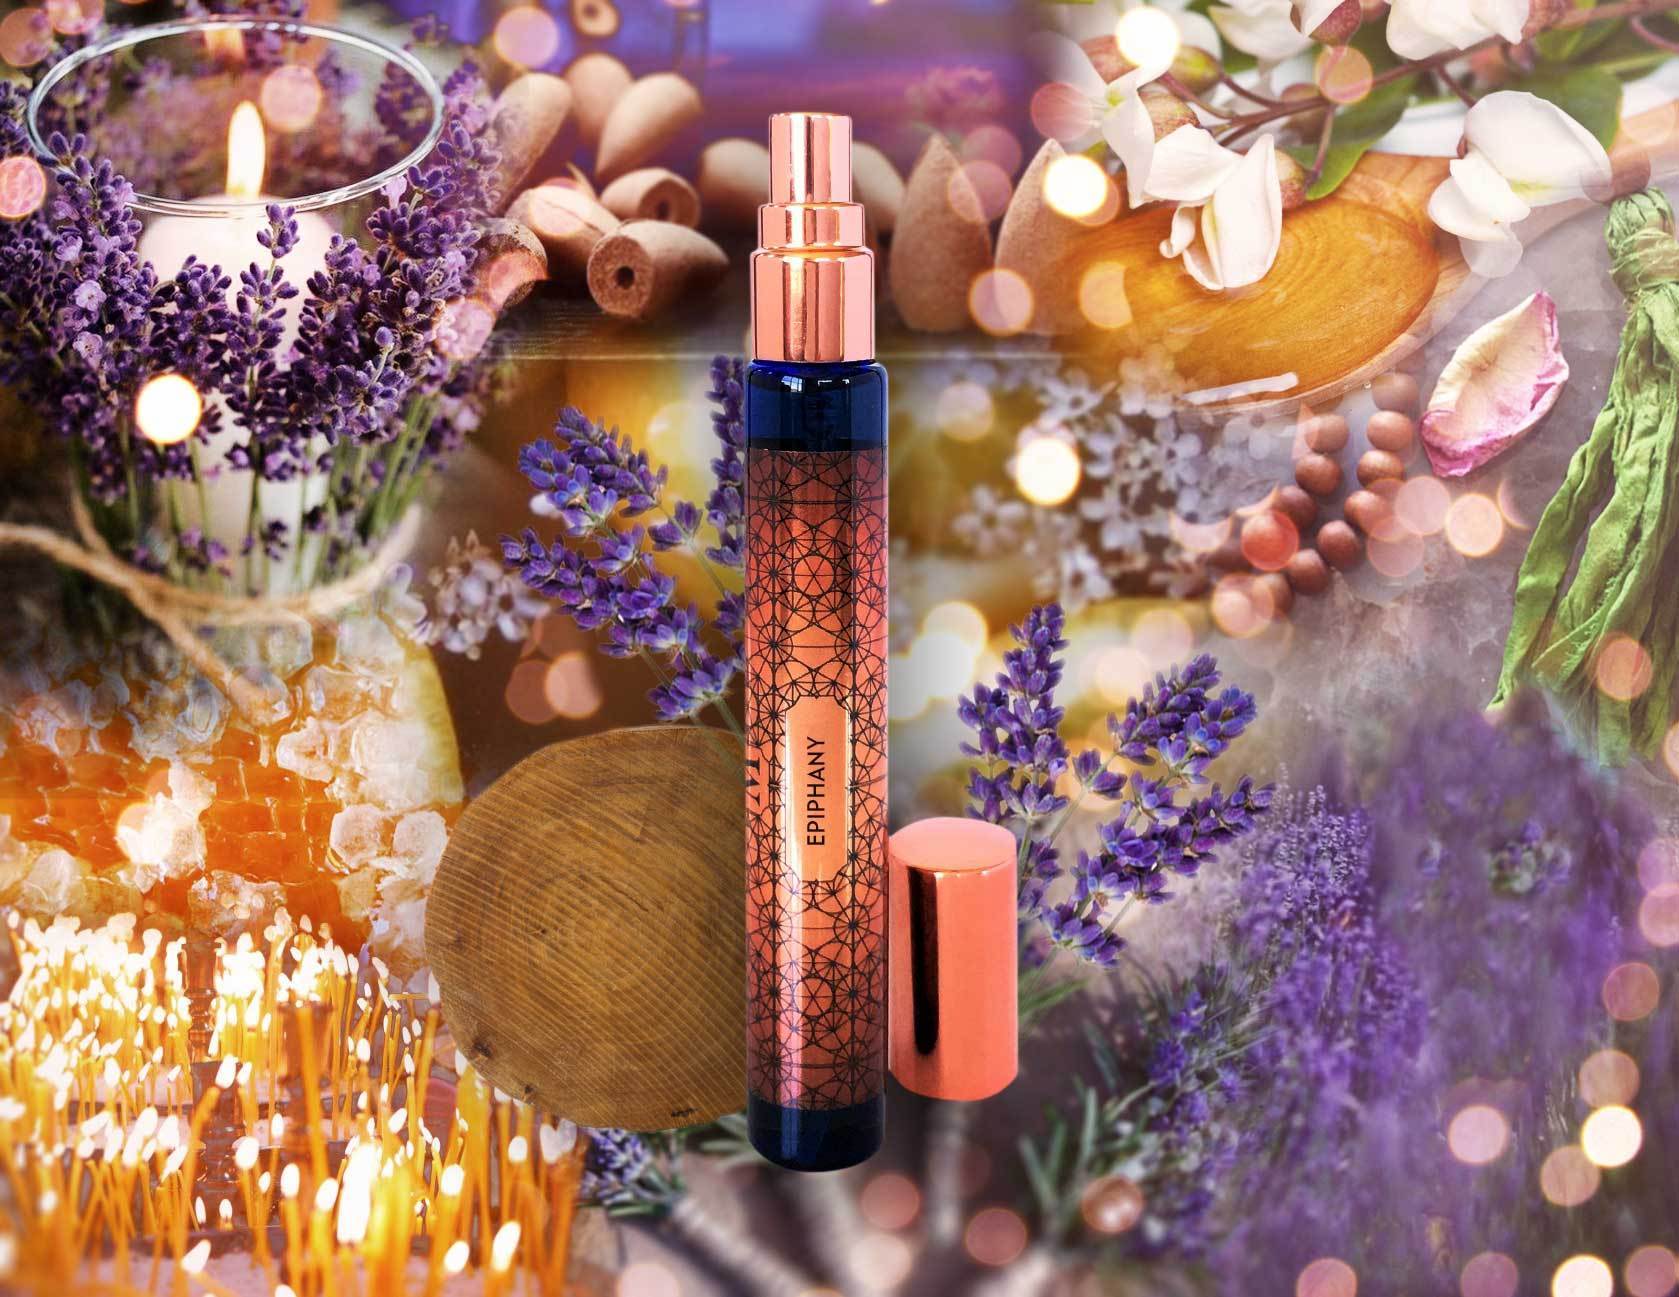 Matriarch Perfumes EPIPHANY - Luxury Lavender Fine Fragrance